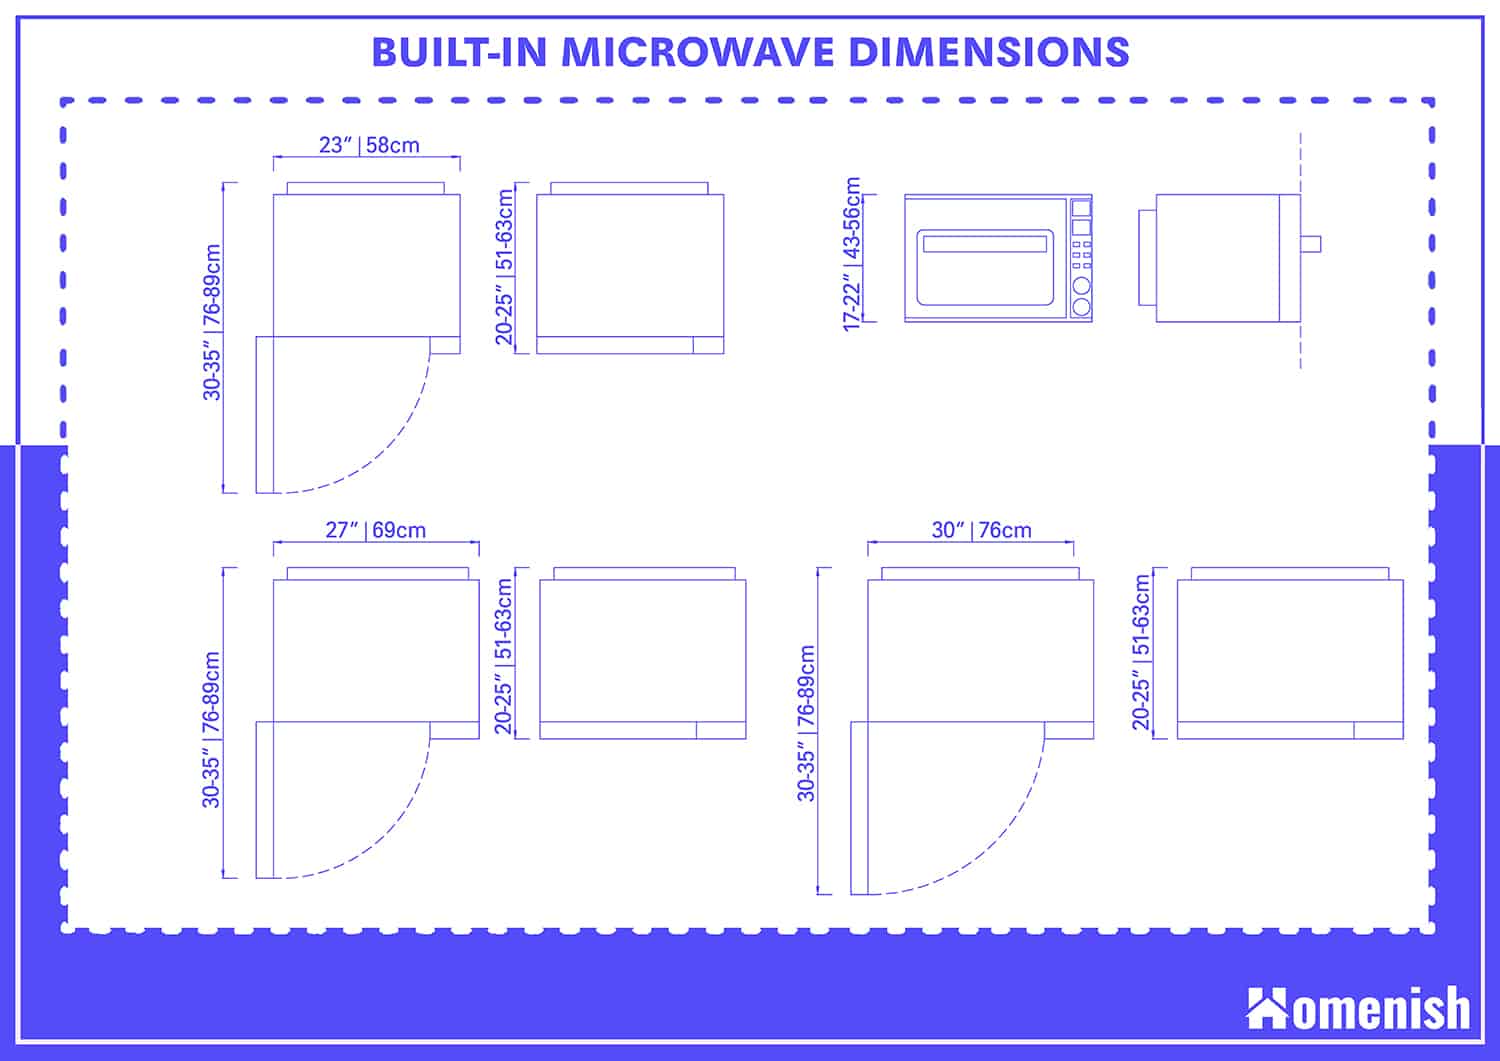 Built-In Microwave Dimensions